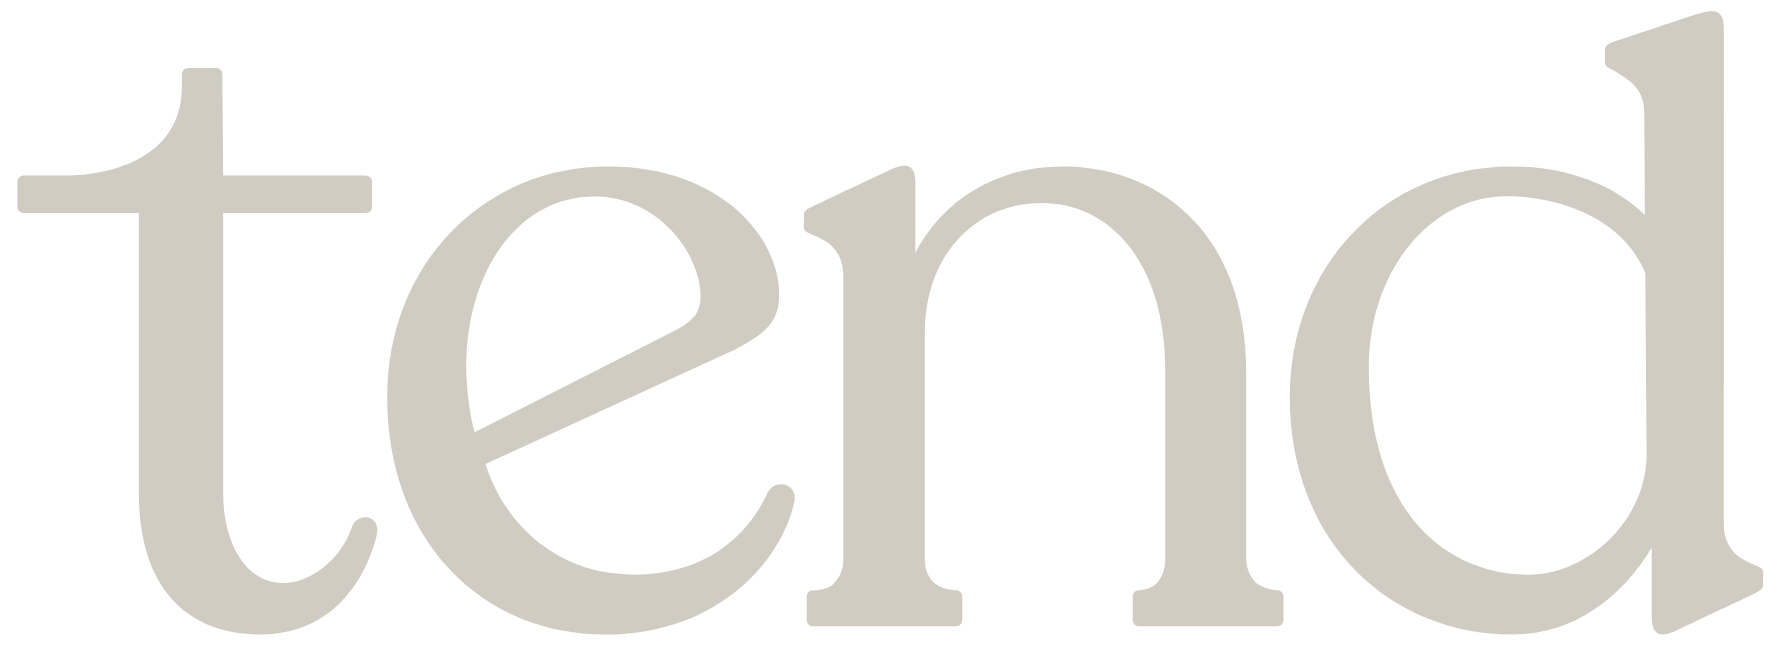 CFO Logo - Tend - CFO